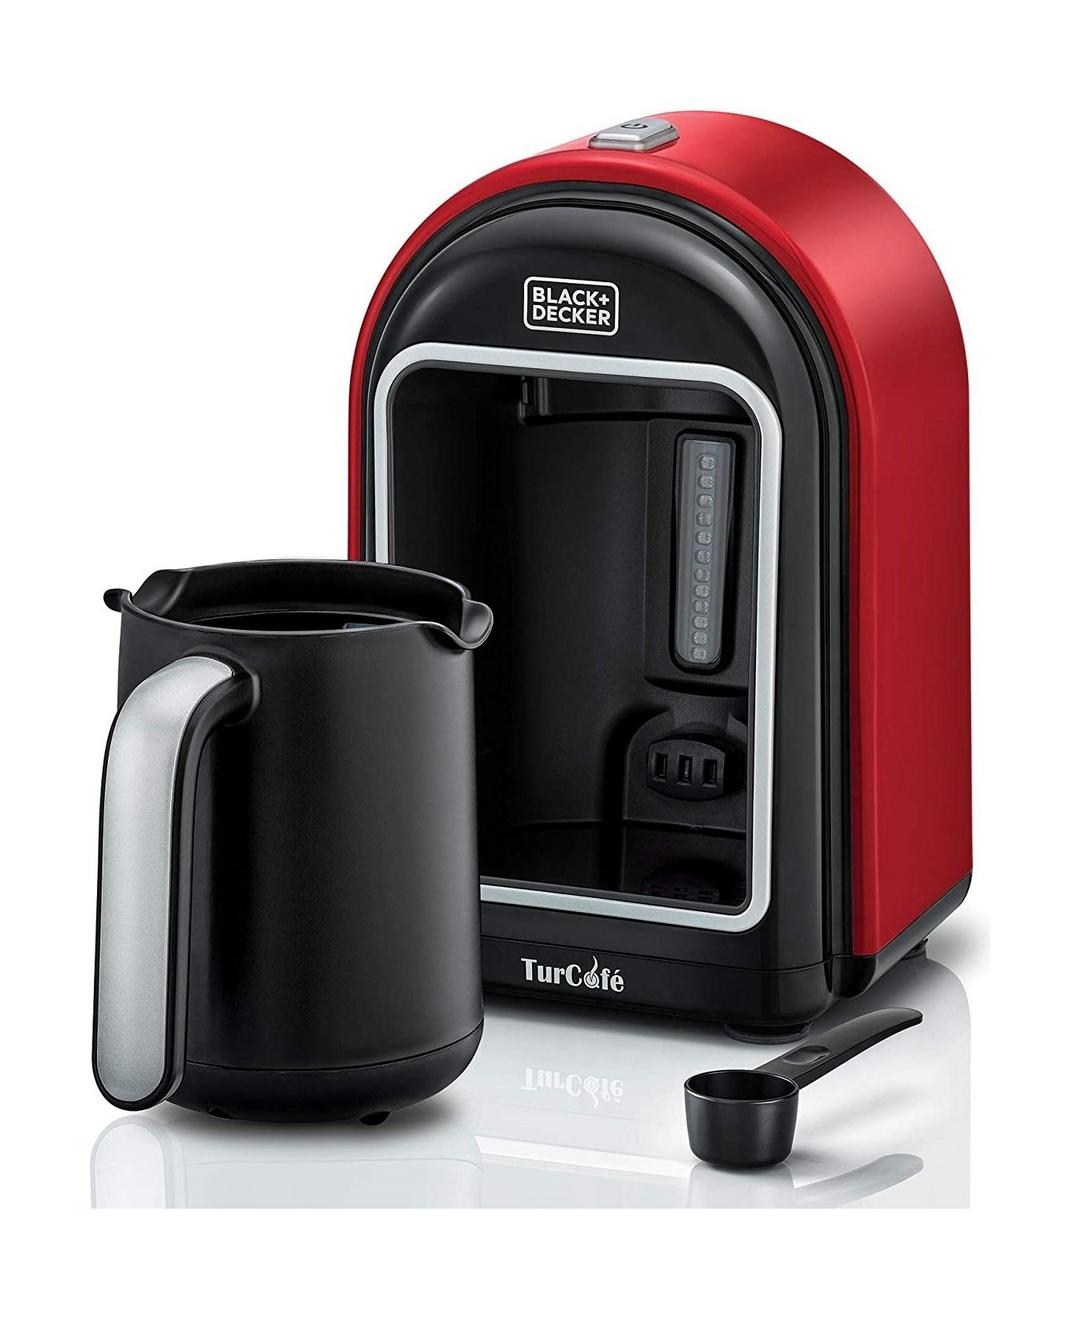 Black+Decker OptiSense 735W Turkish Coffee Maker (TCM700-B5) - Red